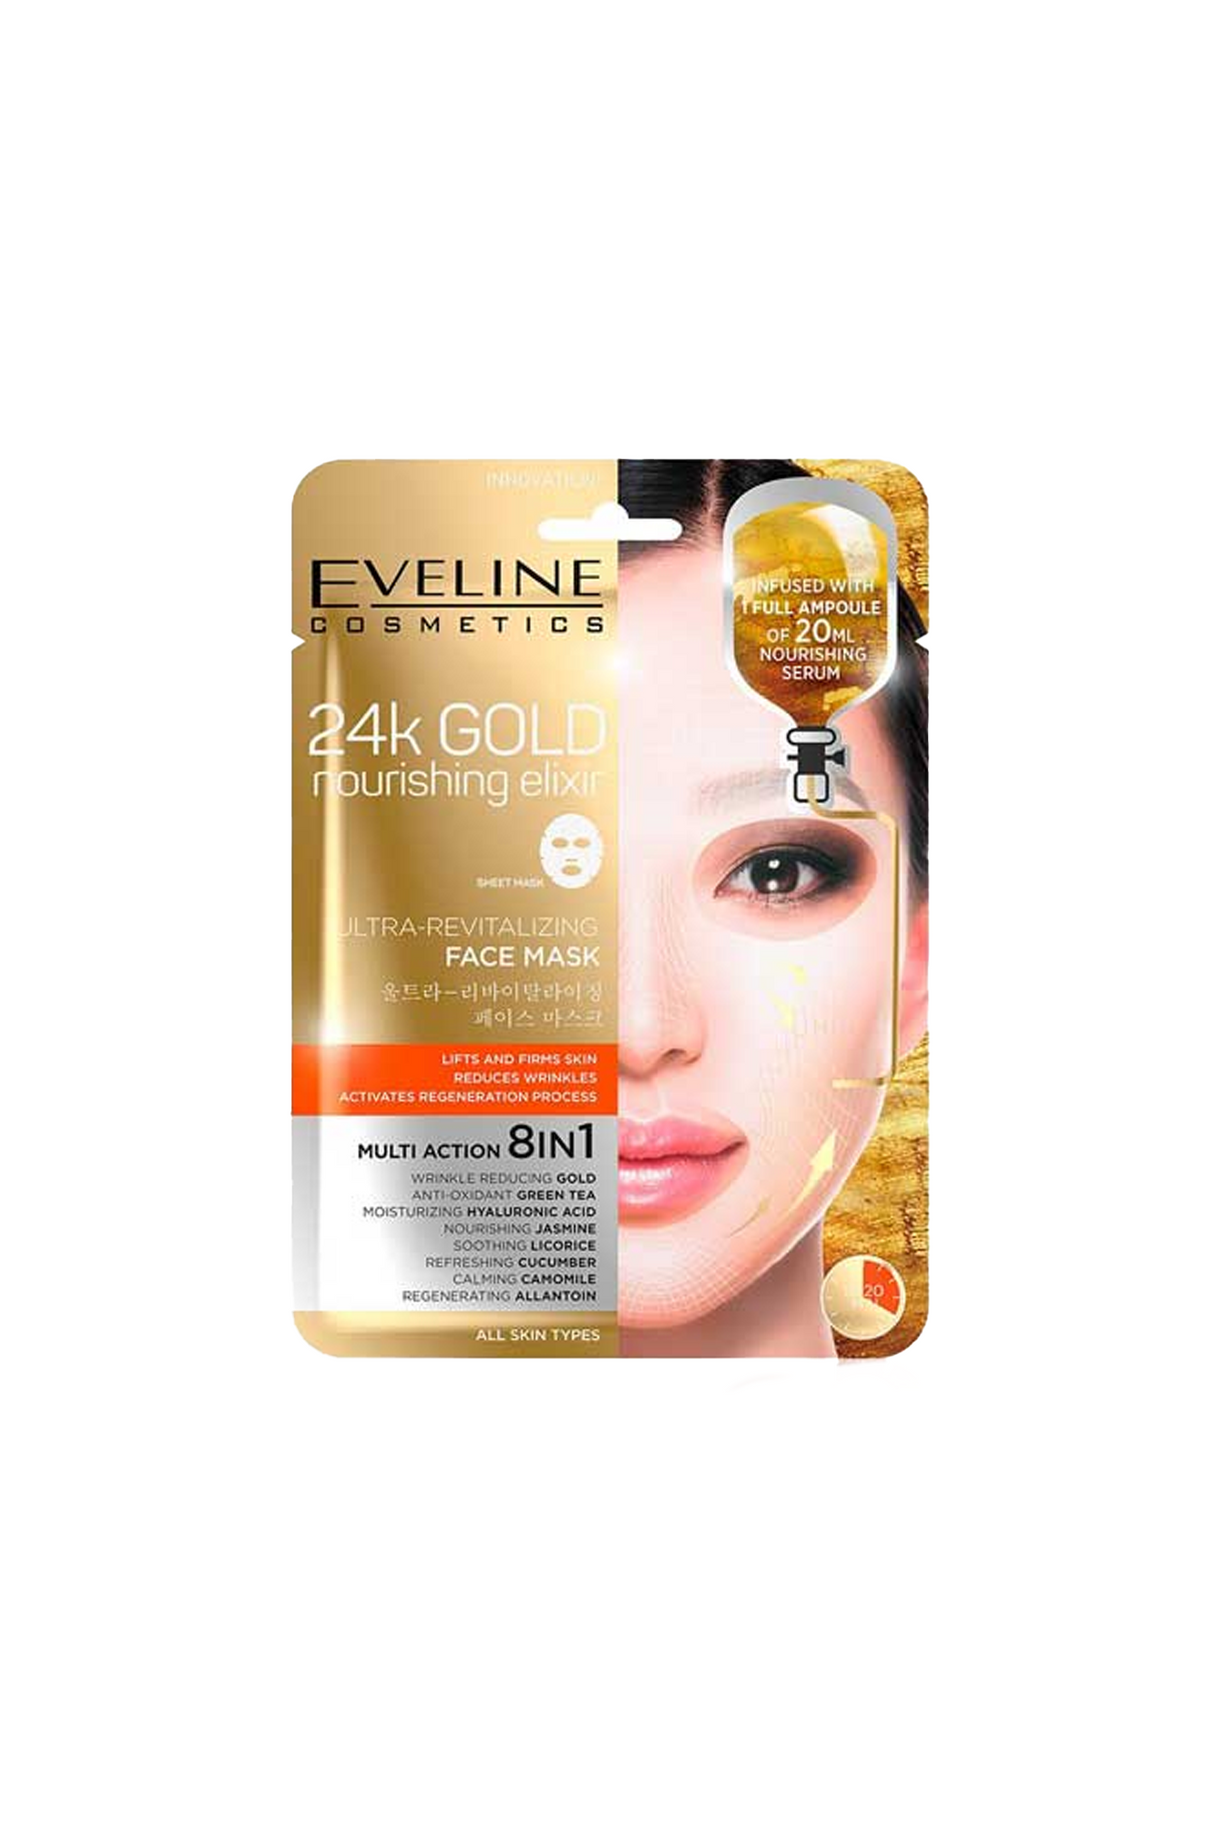 eveline mask 24k gold 8in1